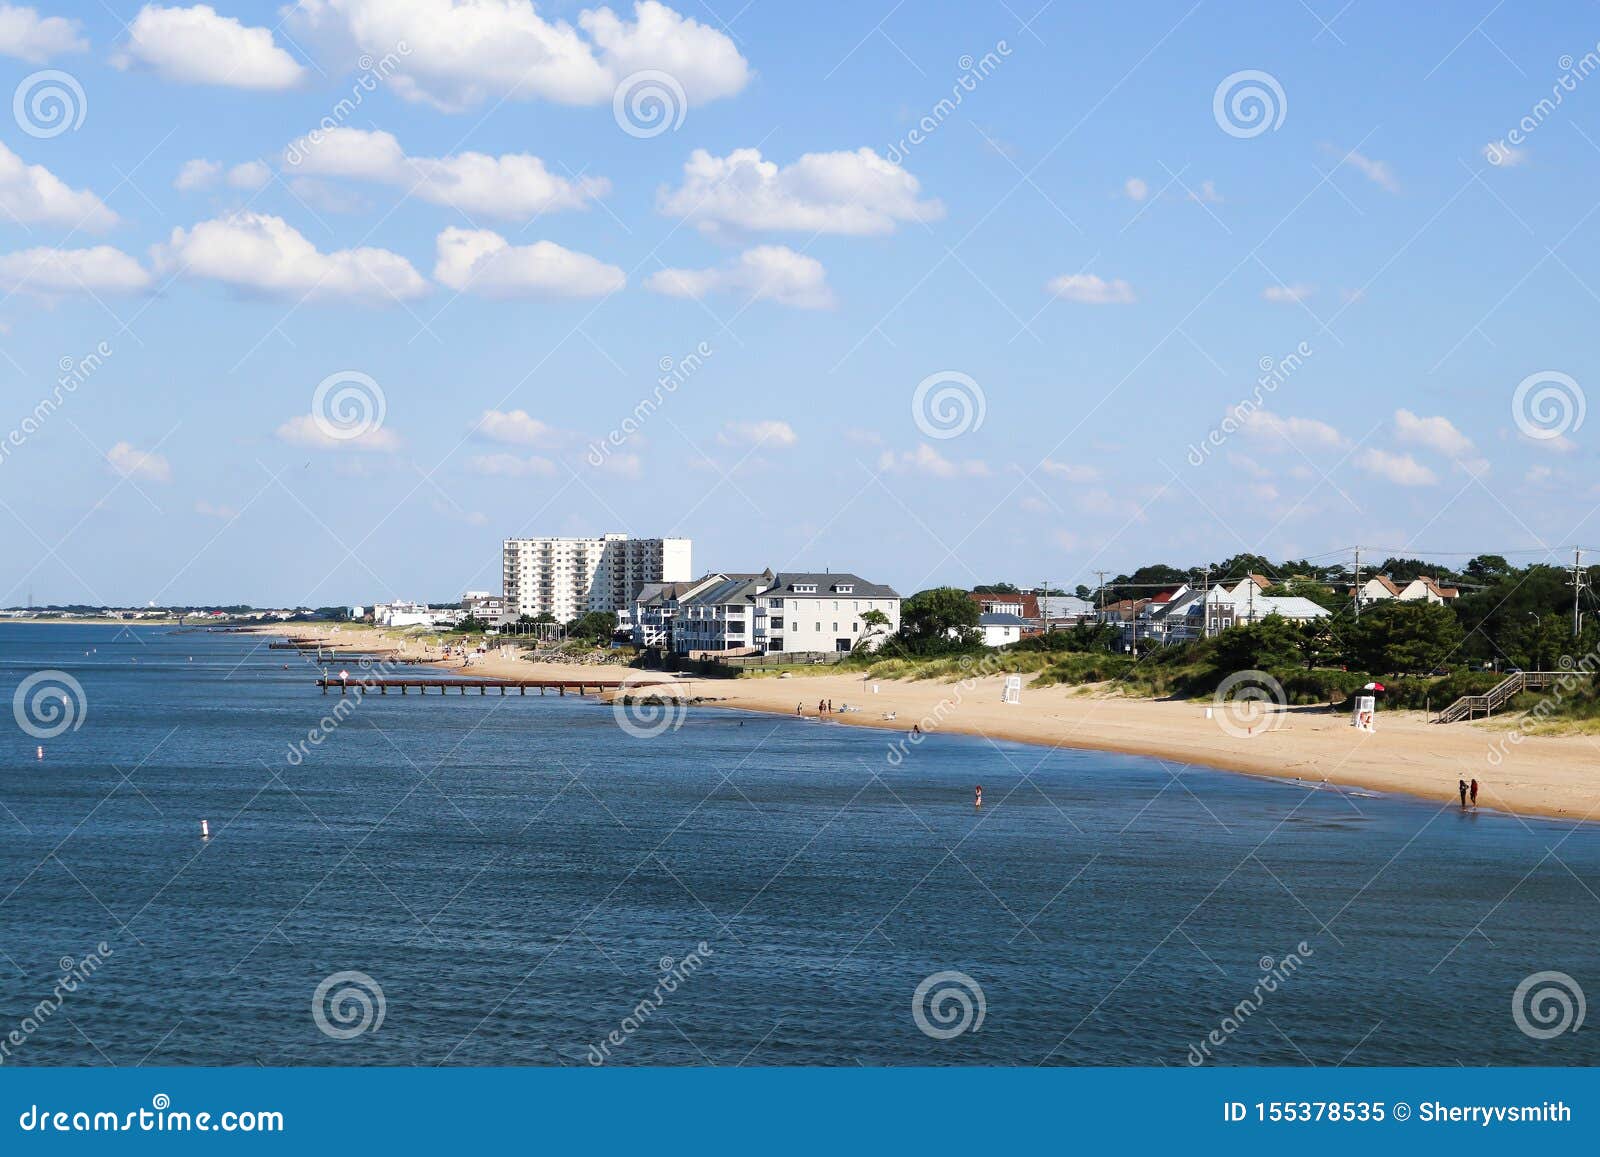 Ocean View Beach In Norfolk Va Stock Image Image Of Chesapeake Holiday